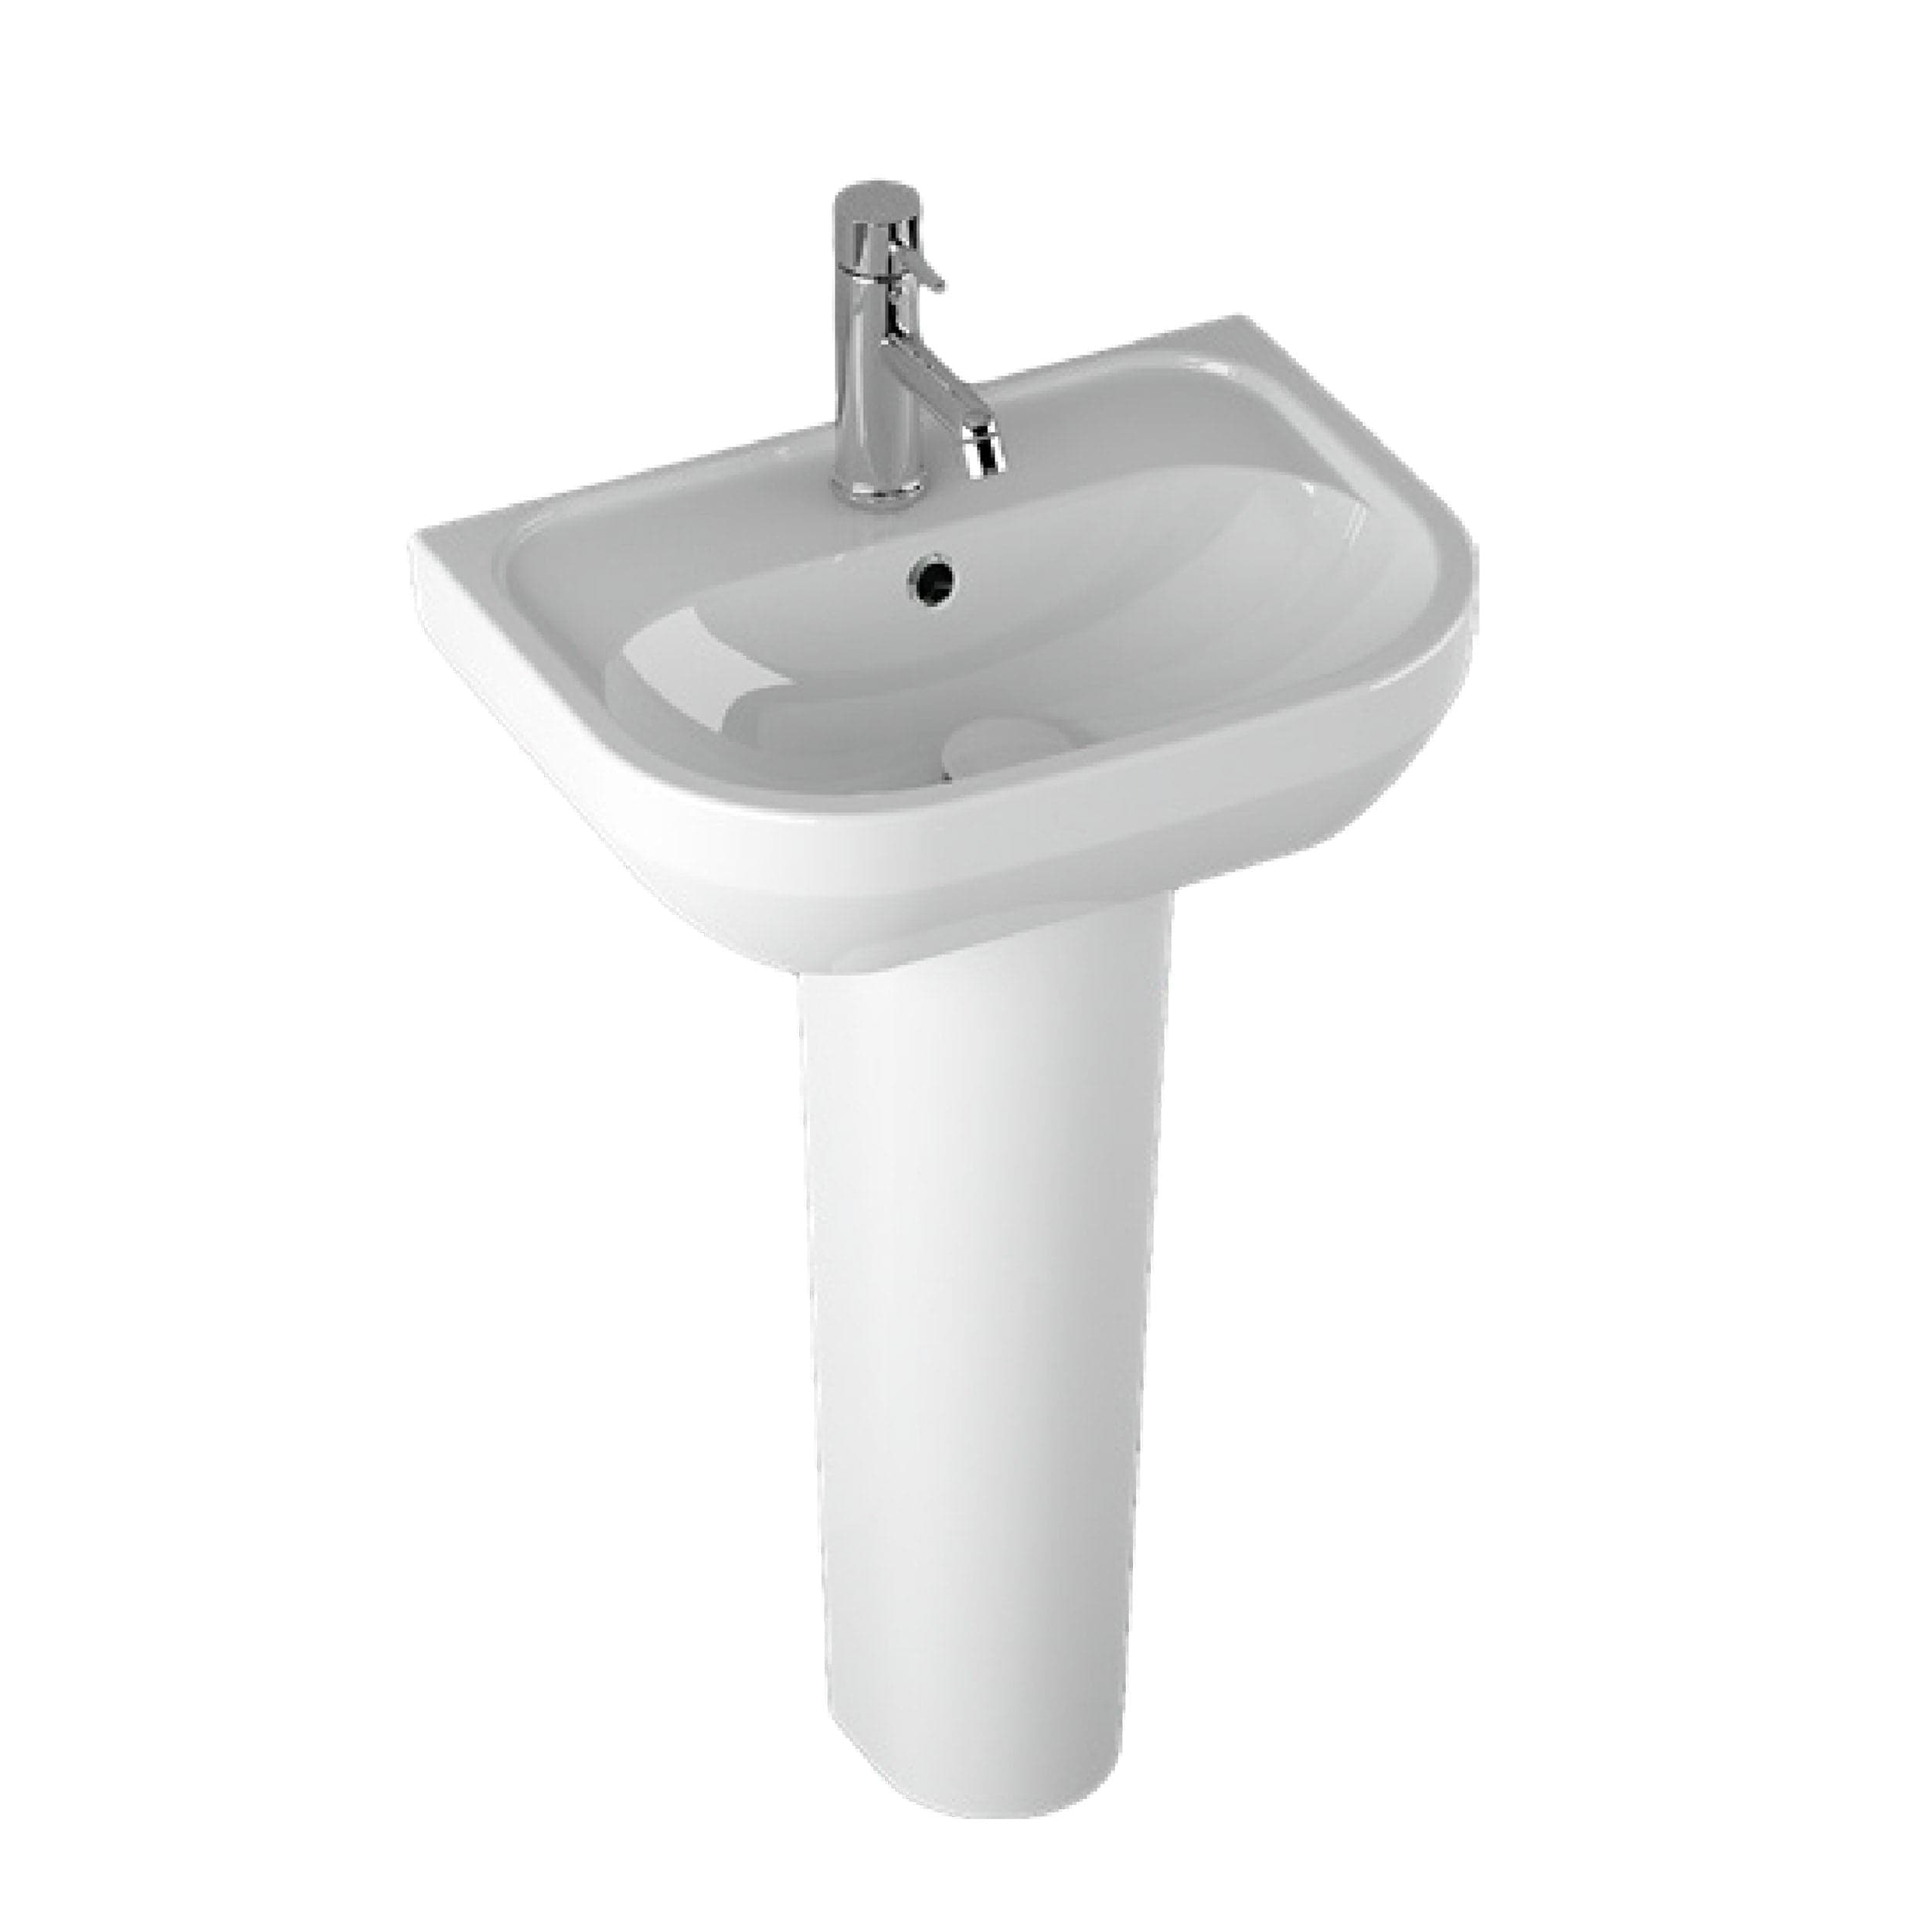 Ece K Form Full Pedestal 56cm Hand Wash Basin | Supply Master | Accra, Ghana Bathroom Sink Buy Tools hardware Building materials